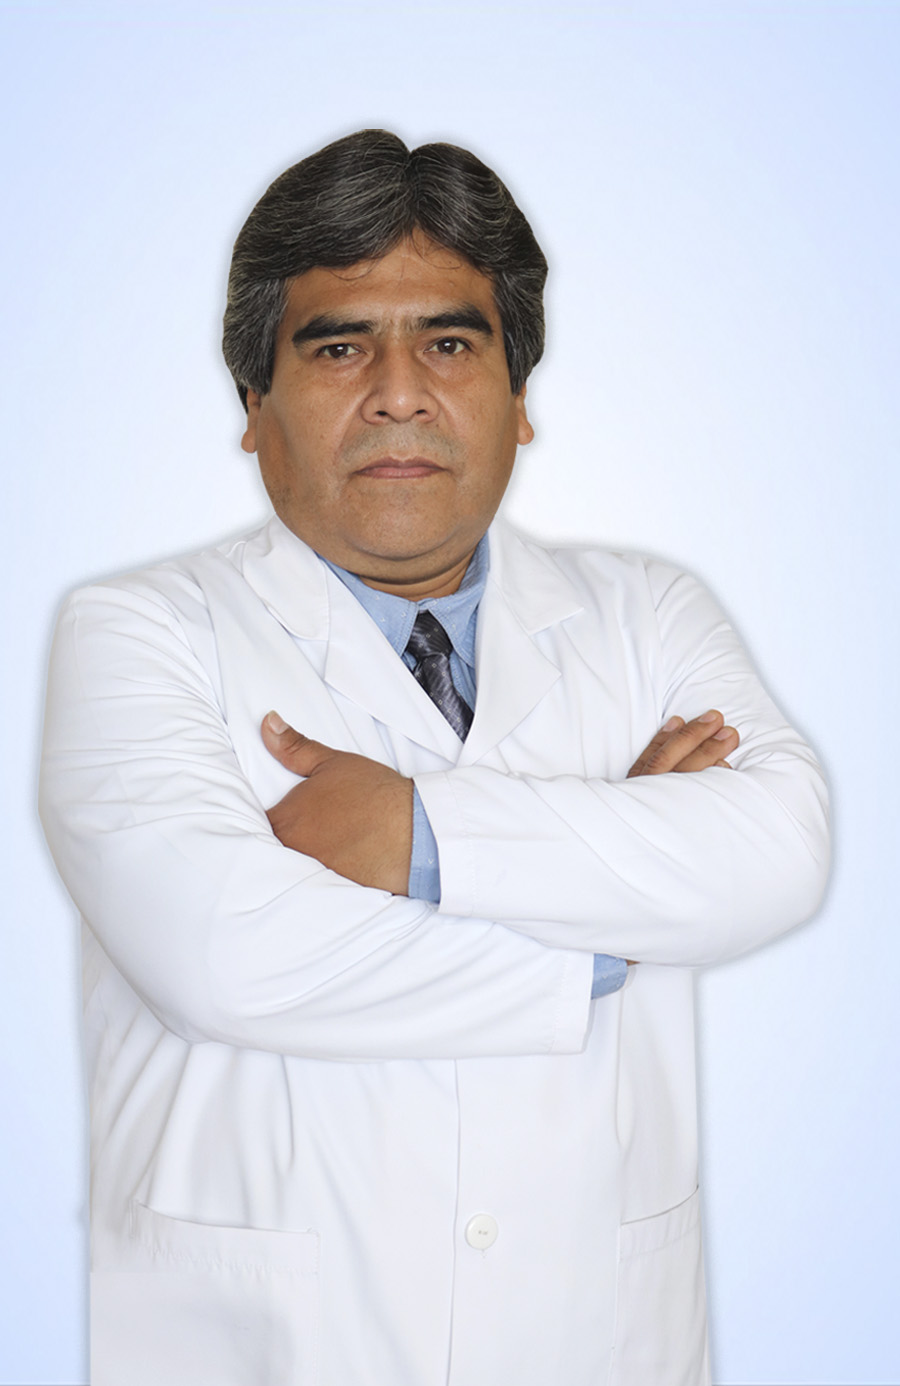 DR. HUATUCO